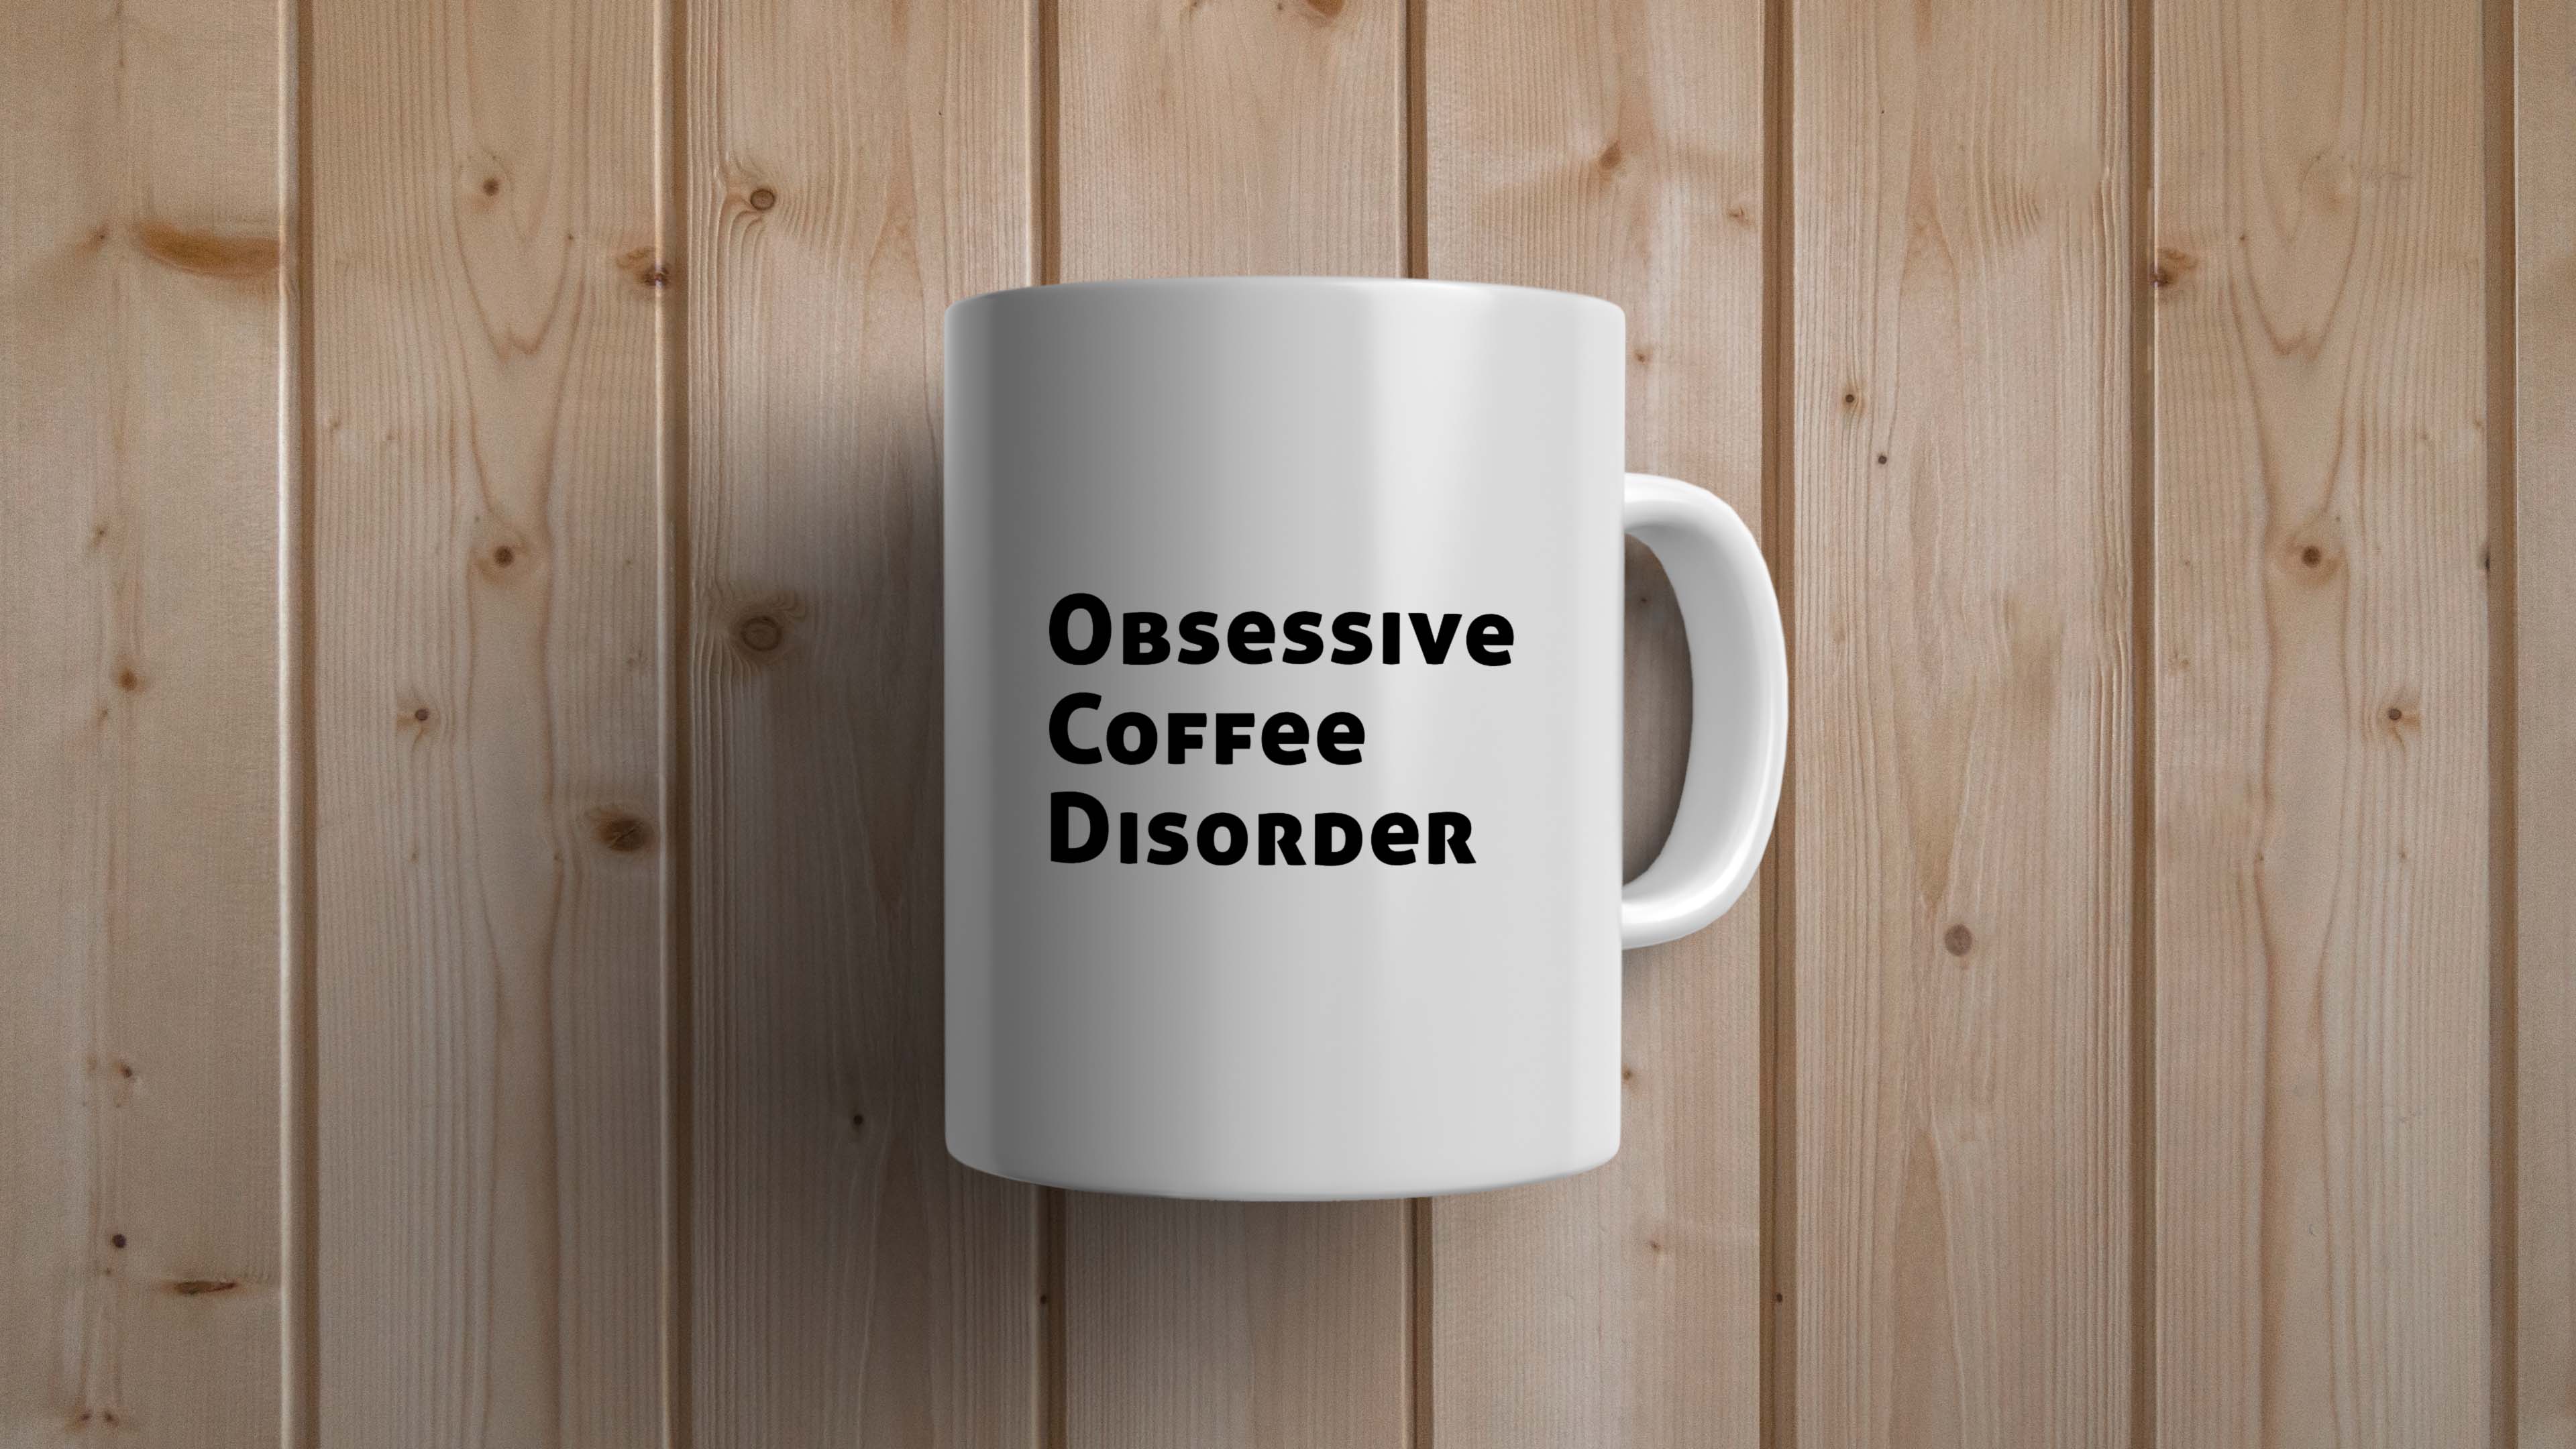 Obsessive Coffee Disorder Statement Mug